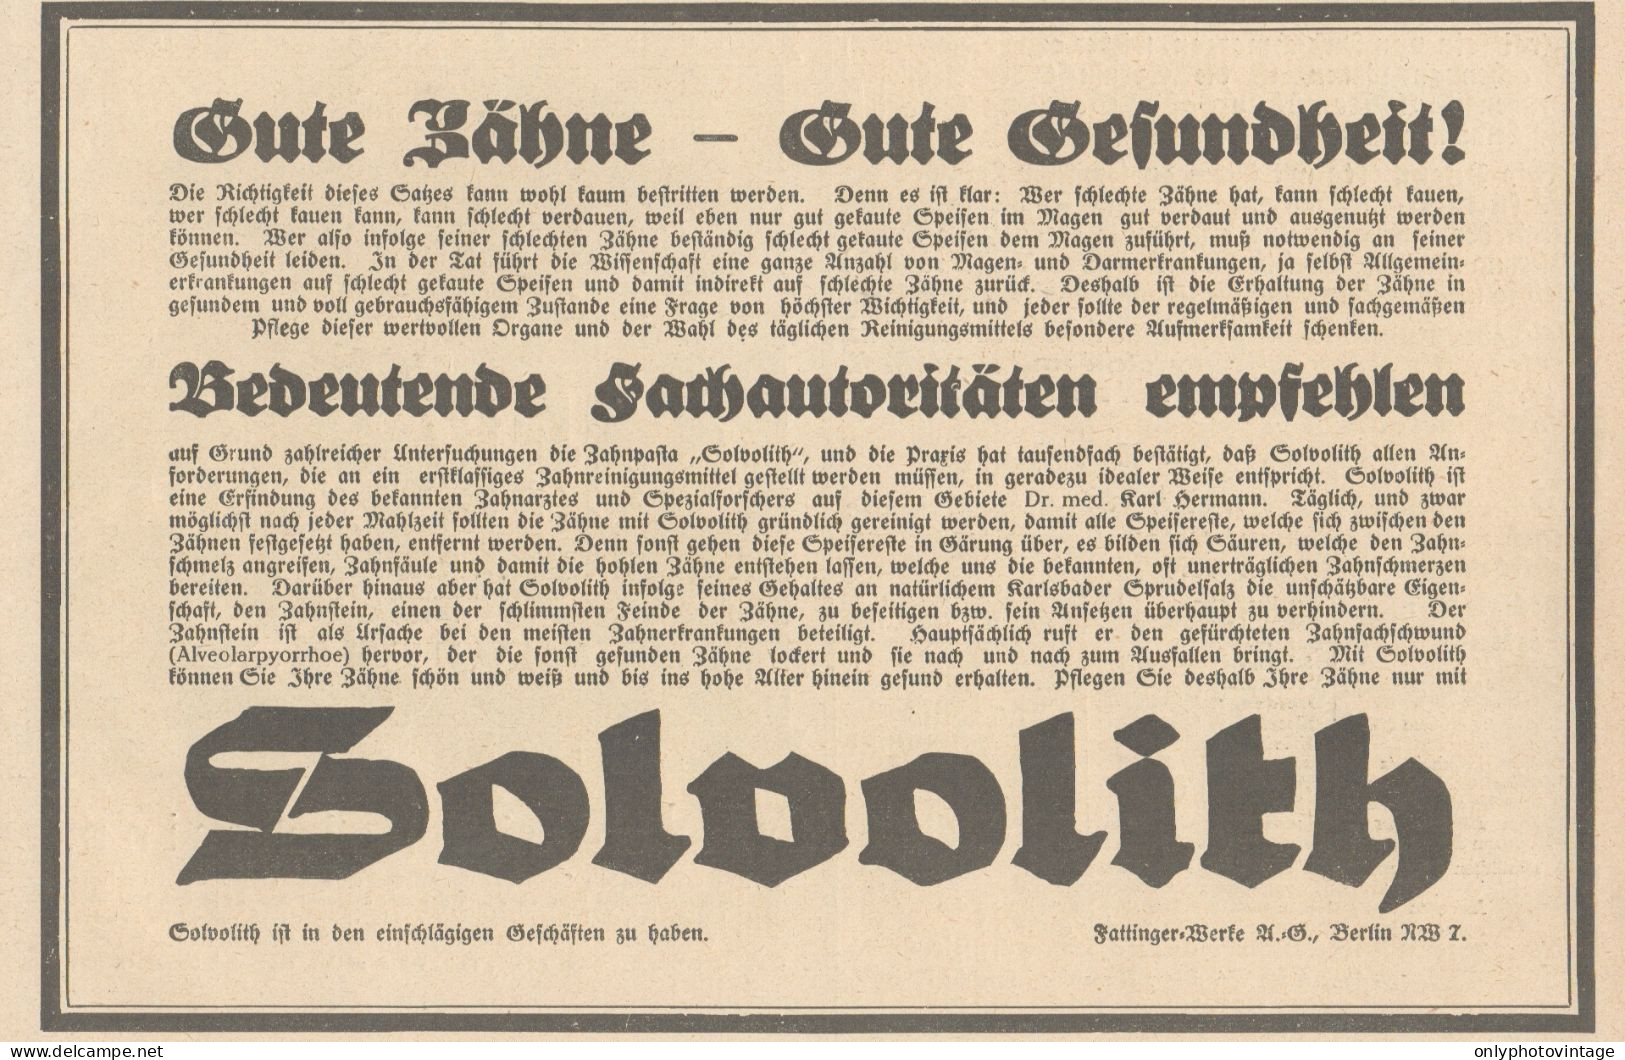 Dentifricio SOLVOLITH - Pubblicità D'epoca - 1925 Old Advertising - Publicités